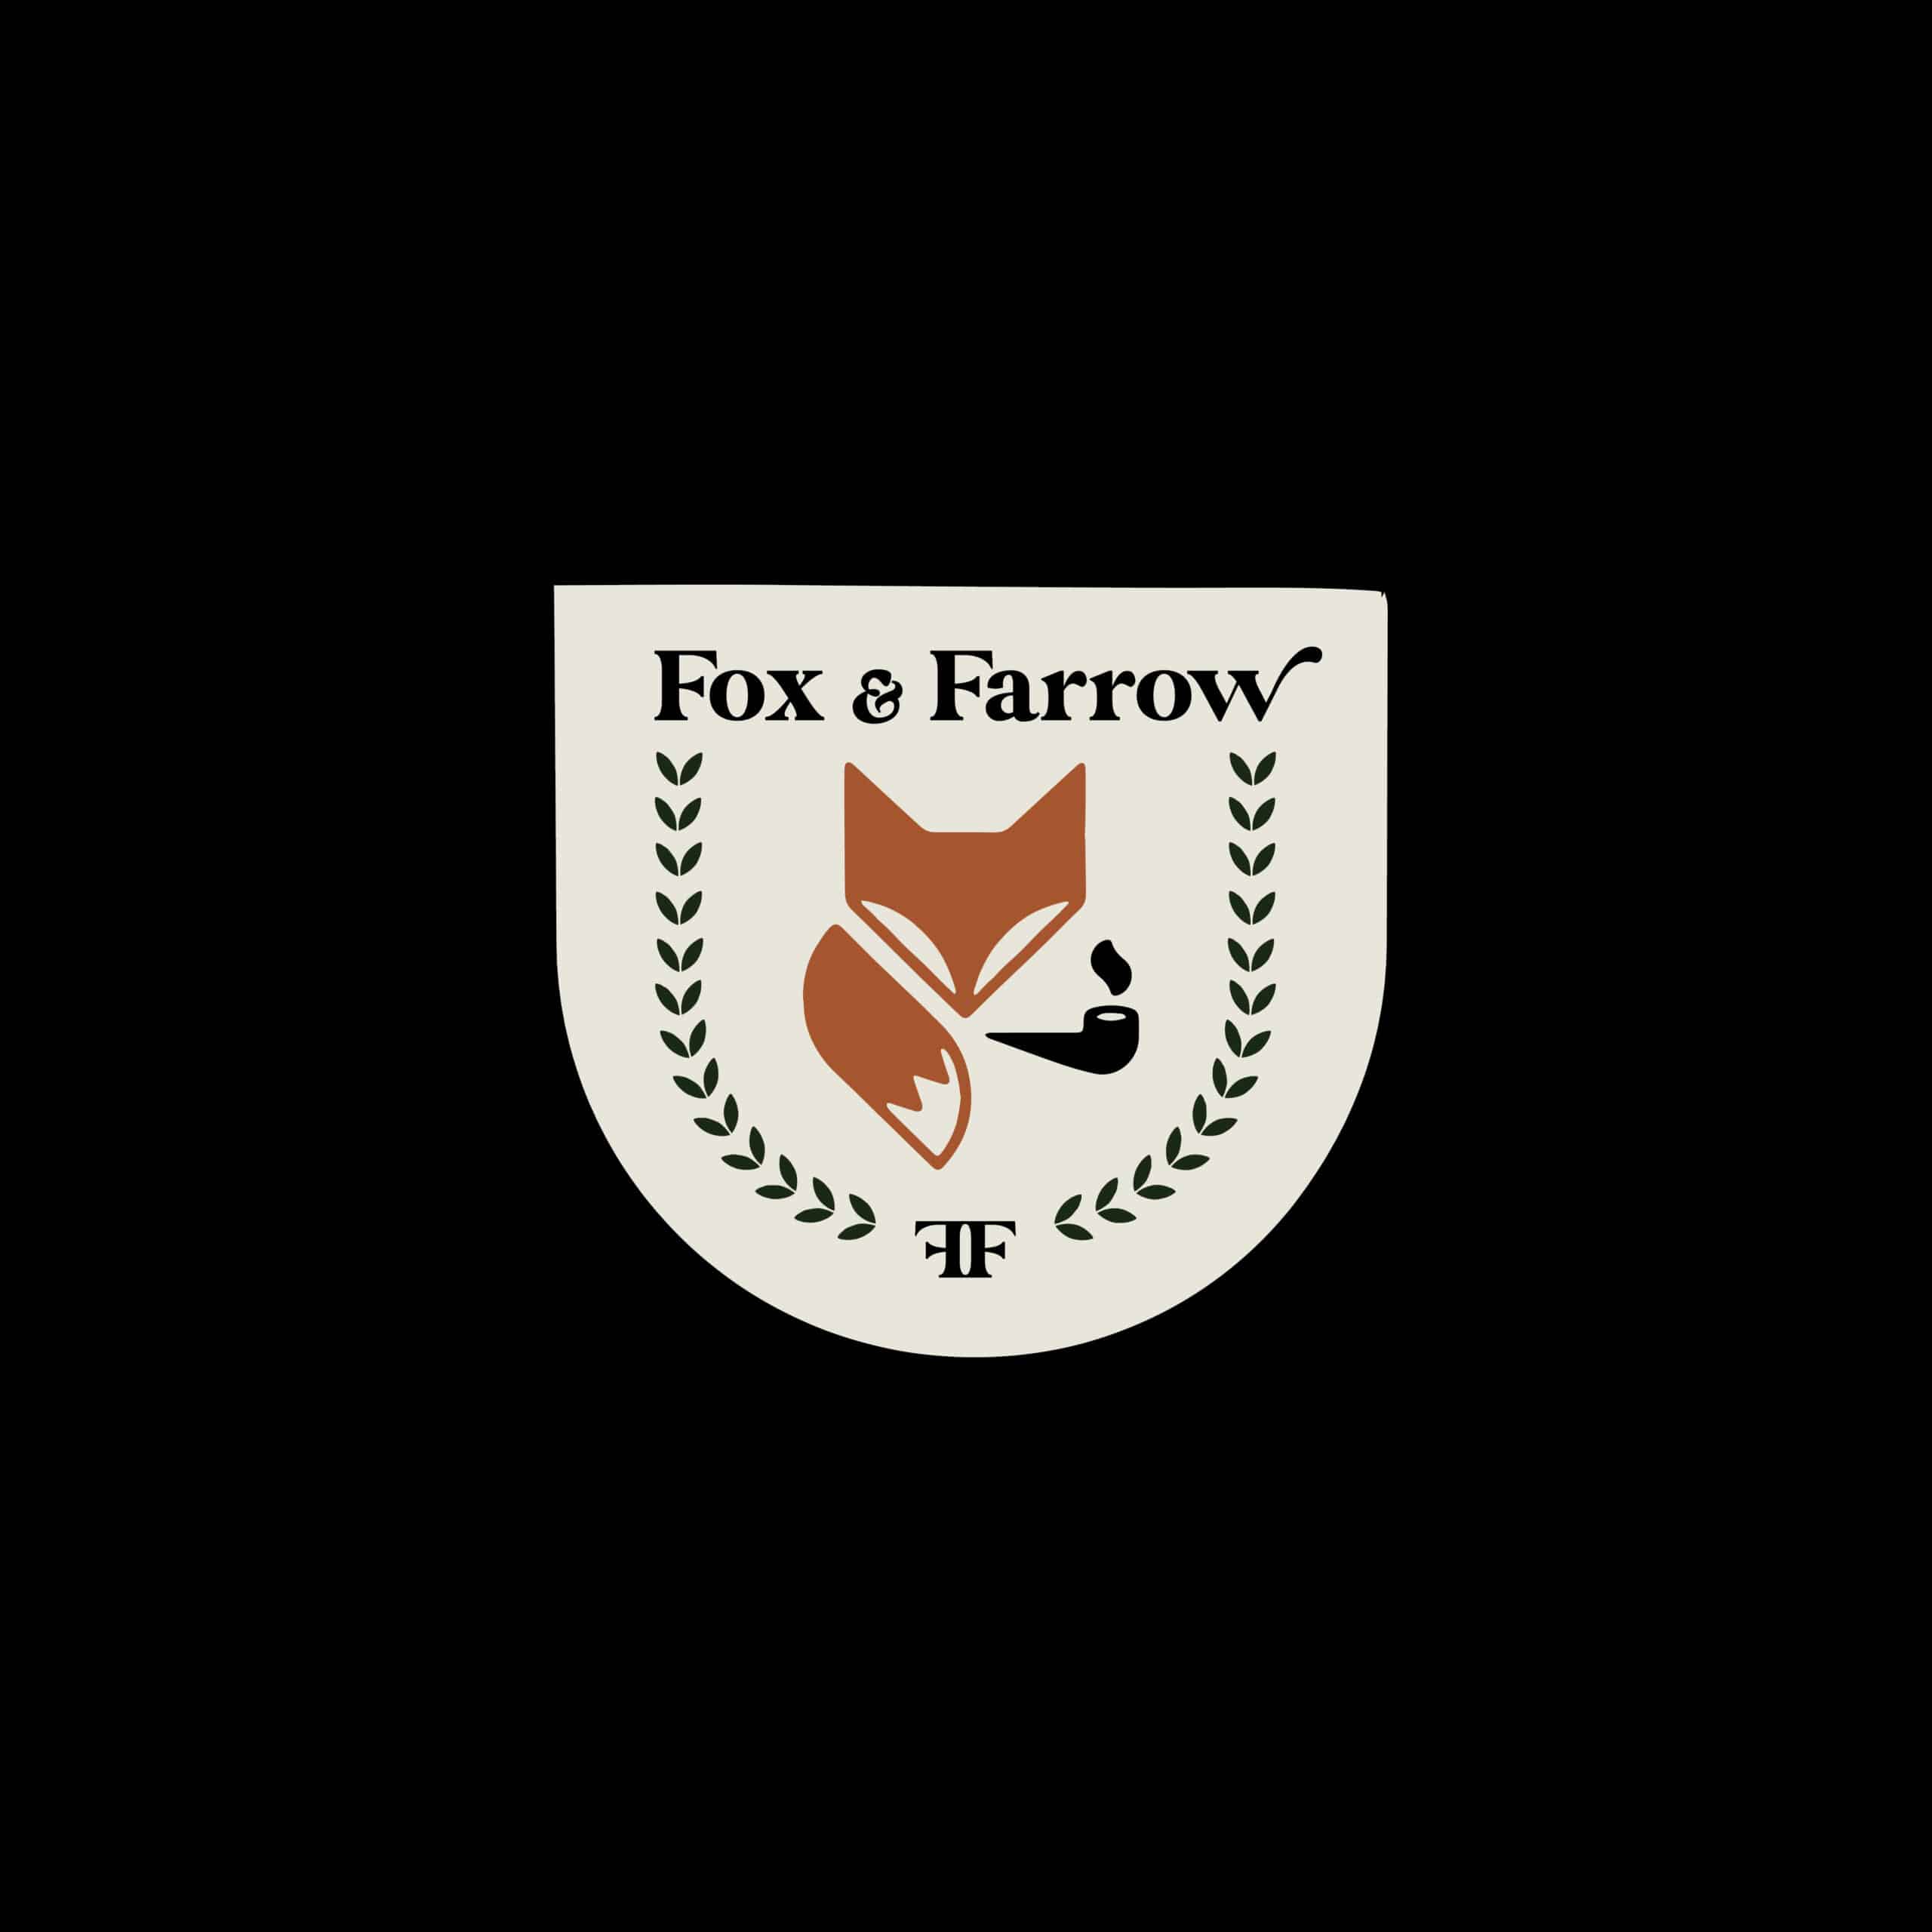 Fox and Farrow Restaurant Branding and Logo Design By Stellen Design Branding Agency in Los Angeles Ca